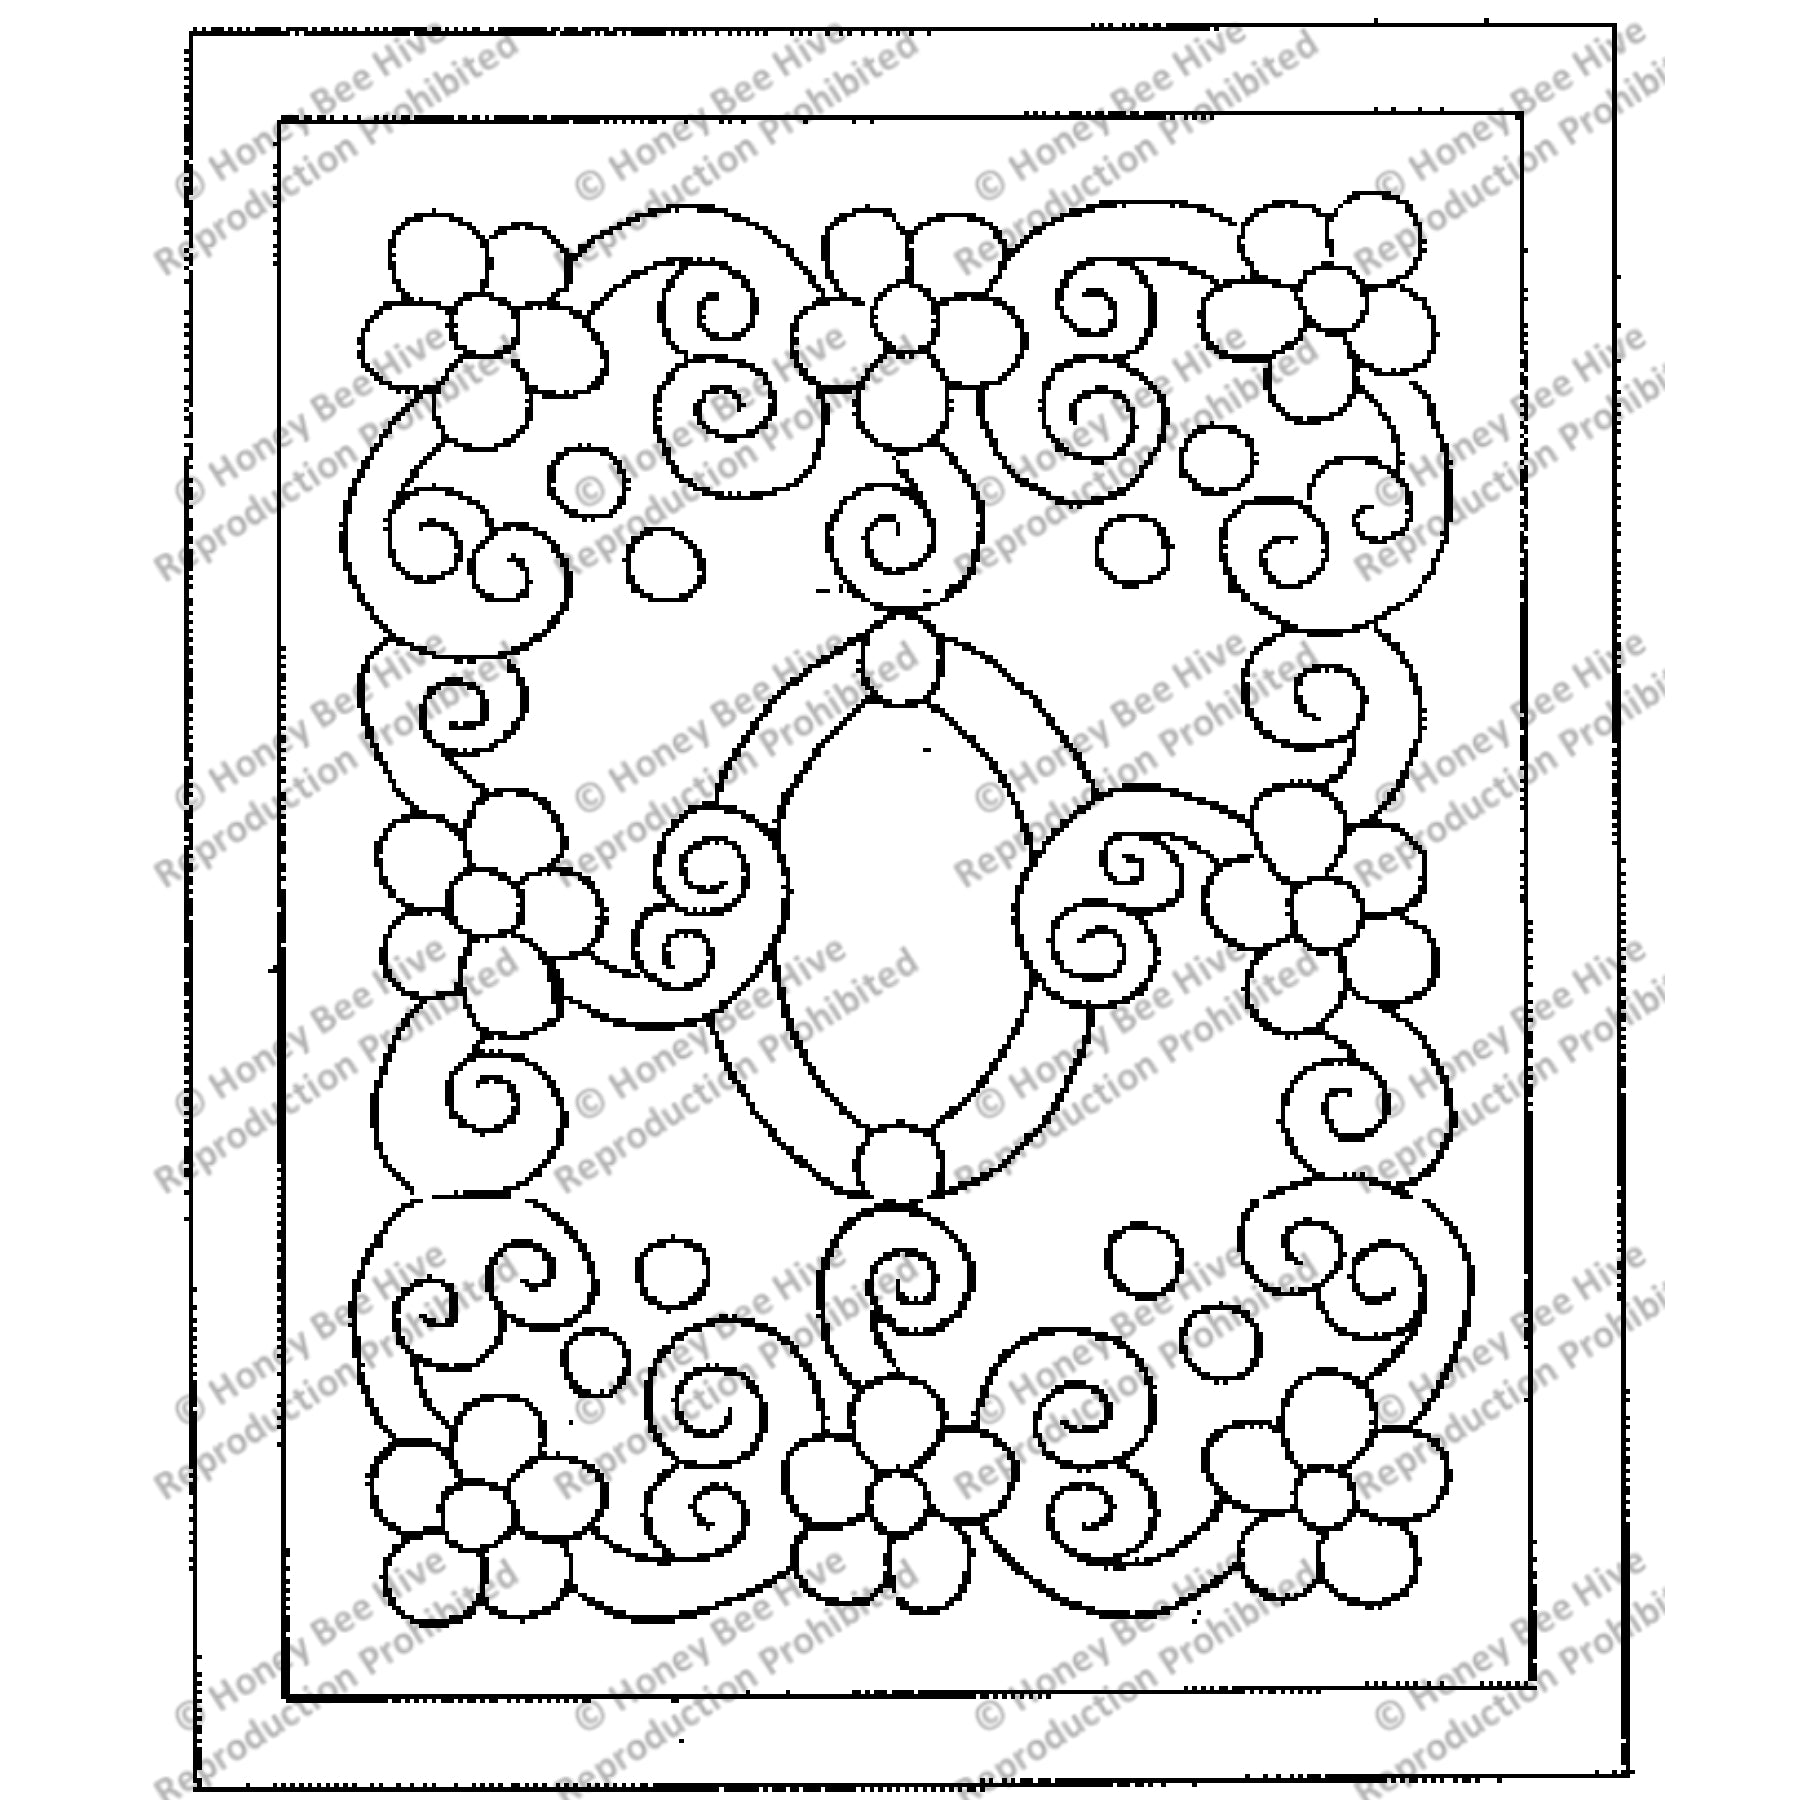 Curli-Q, rug hooking pattern